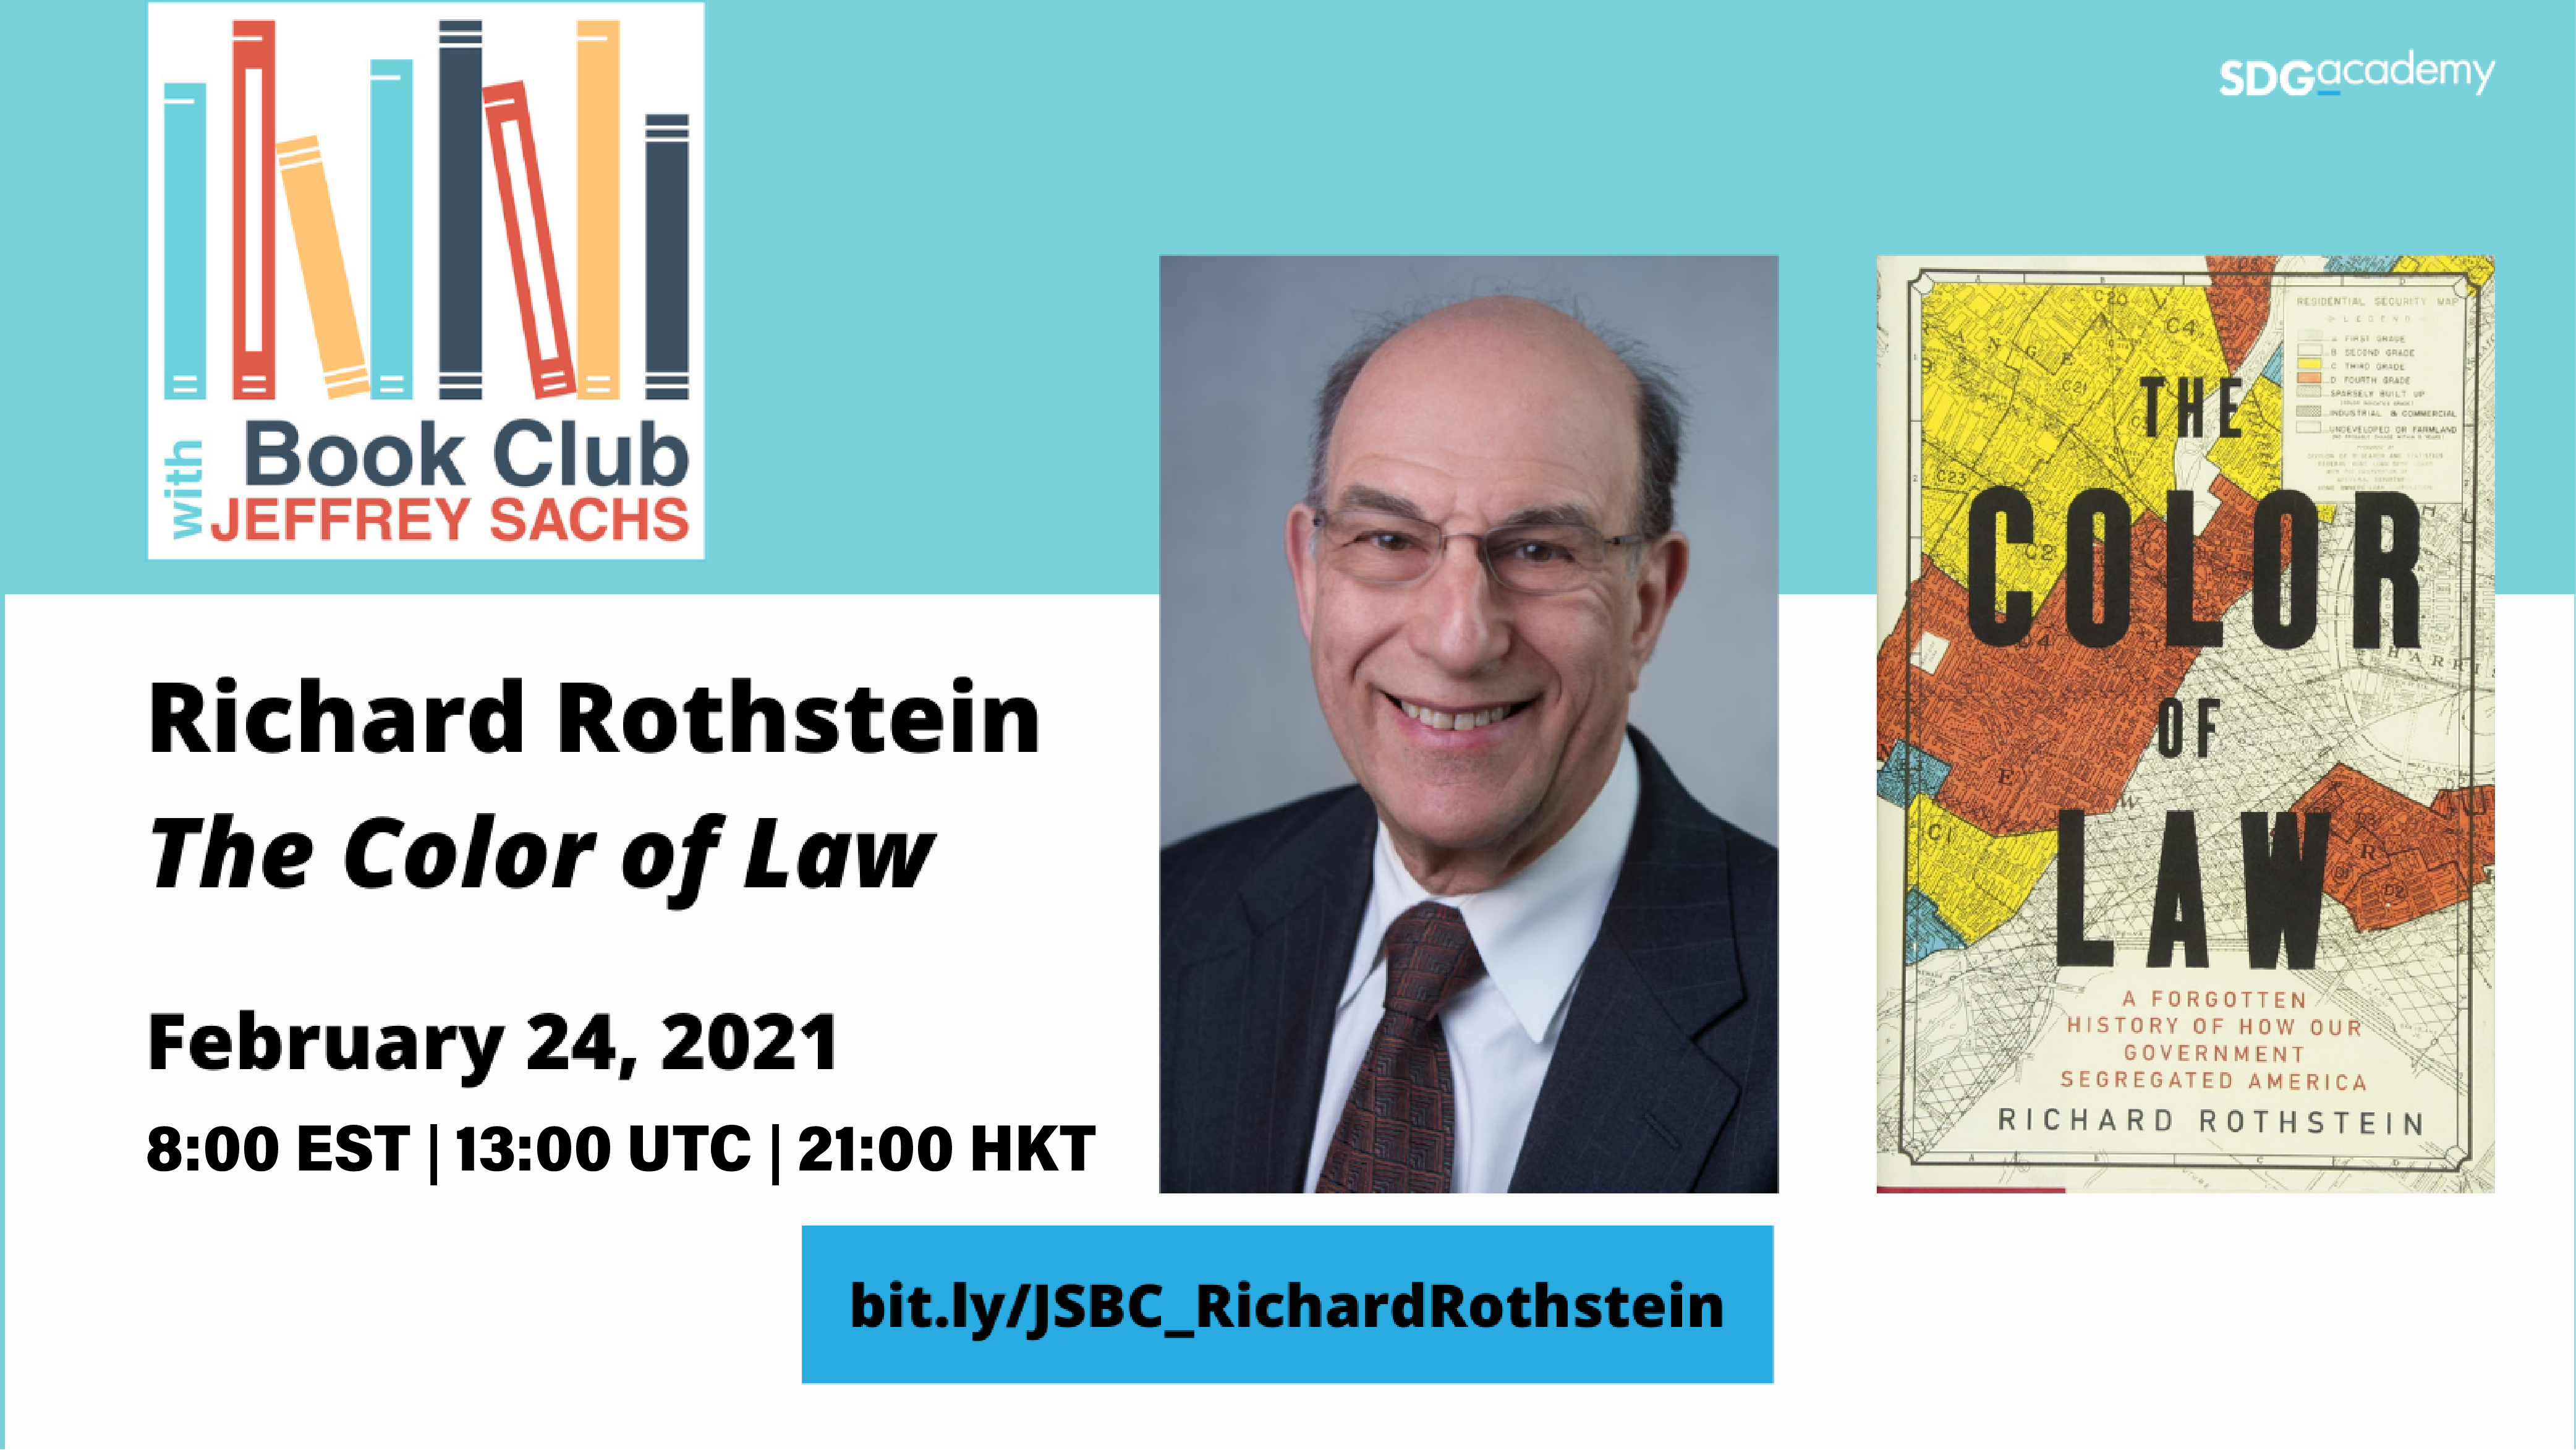 Richard Rothstein